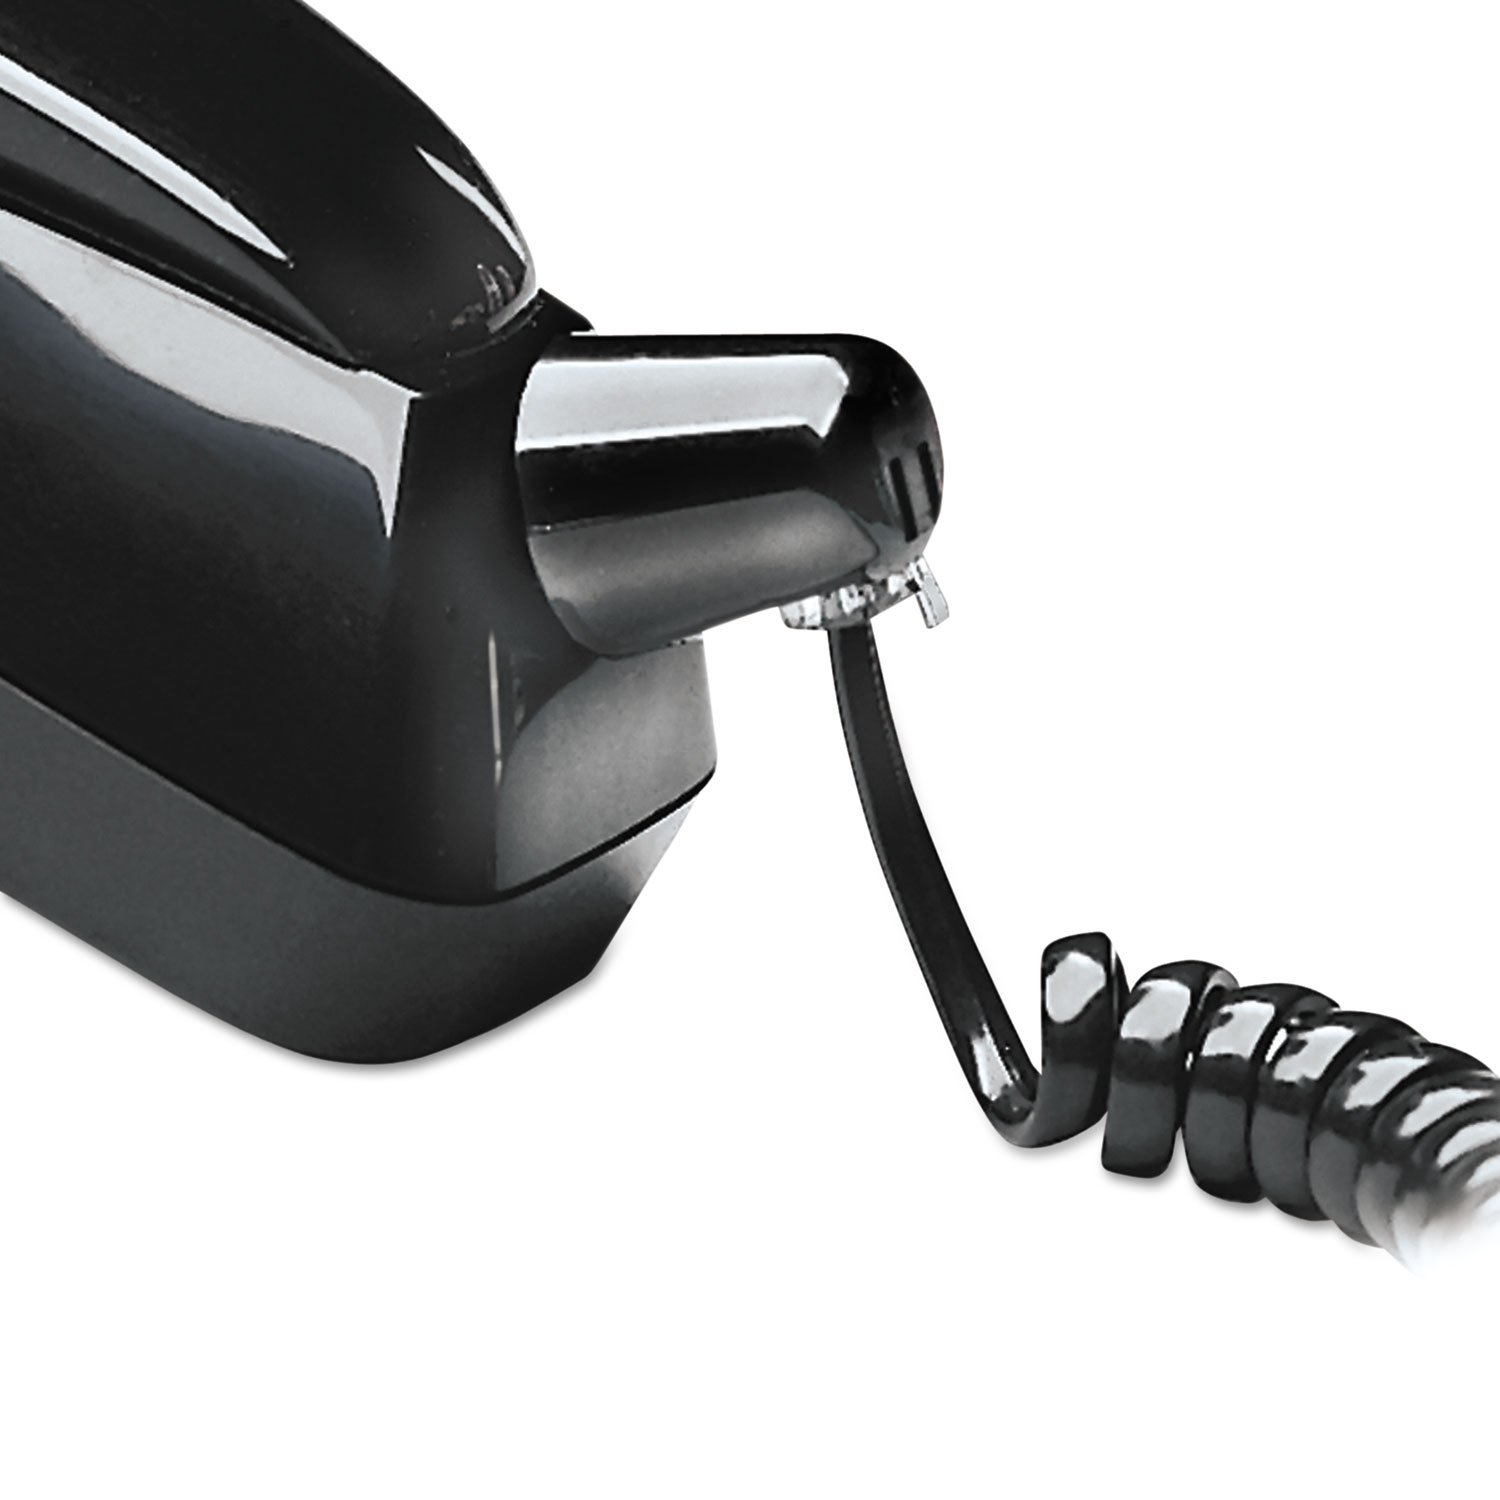  Softalk 03201 Twisstop Detangler with Coiled, 25-Foot Phone Cord, Black (SOF03201) 